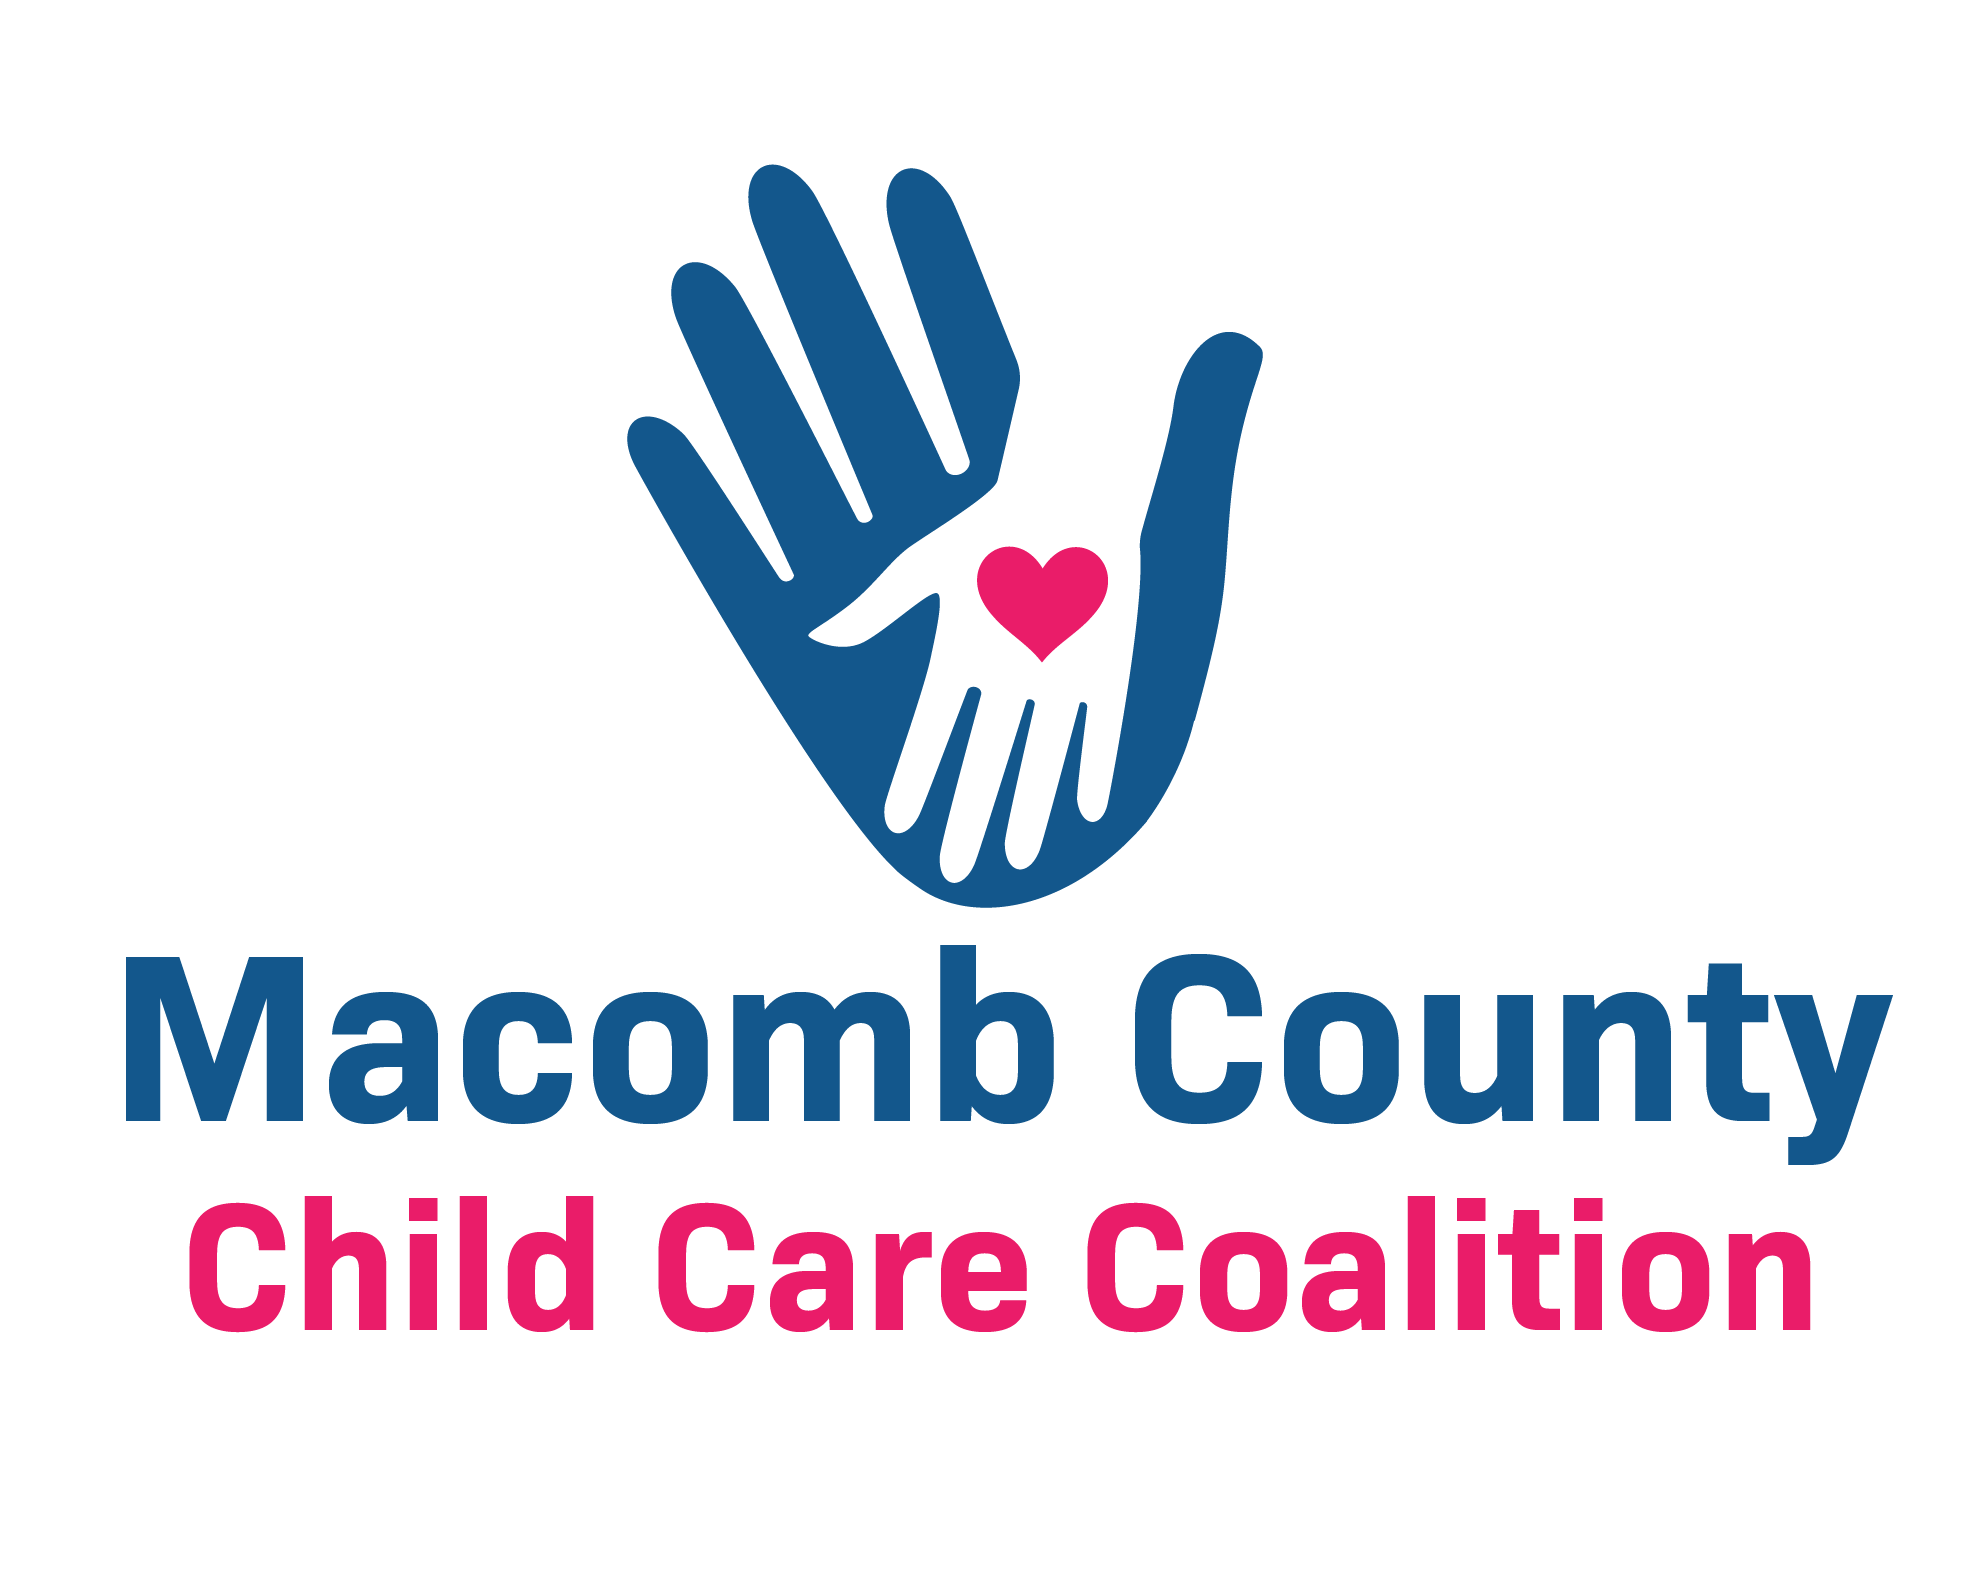 Macomb County Child Care Coalition logo